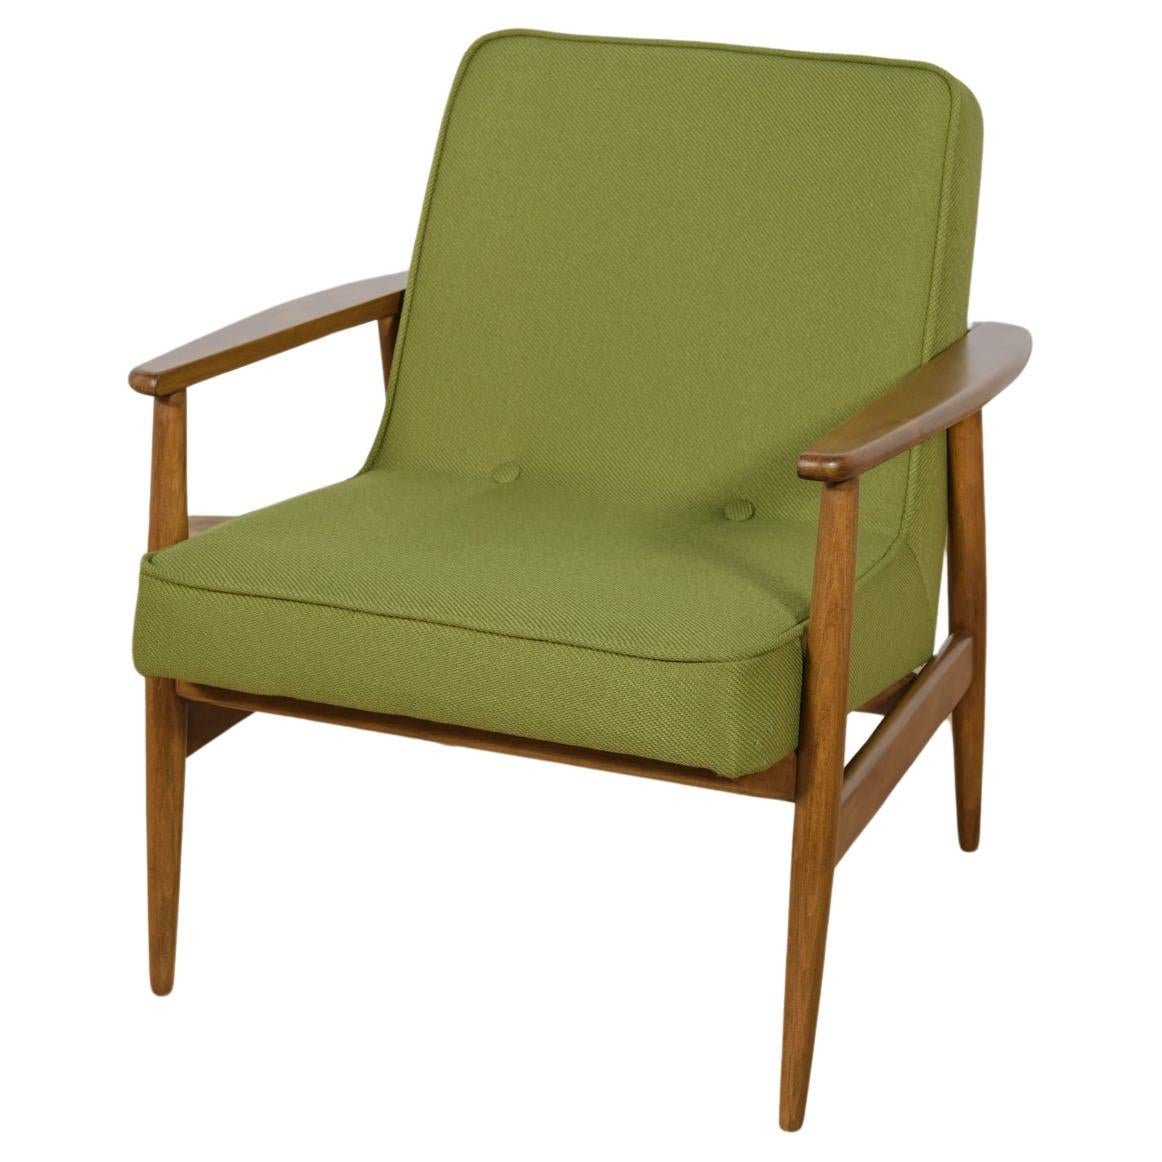  Model 300-192 Armchair by Juliusz Kedziorek from Goscinska Furniture Factory. For Sale